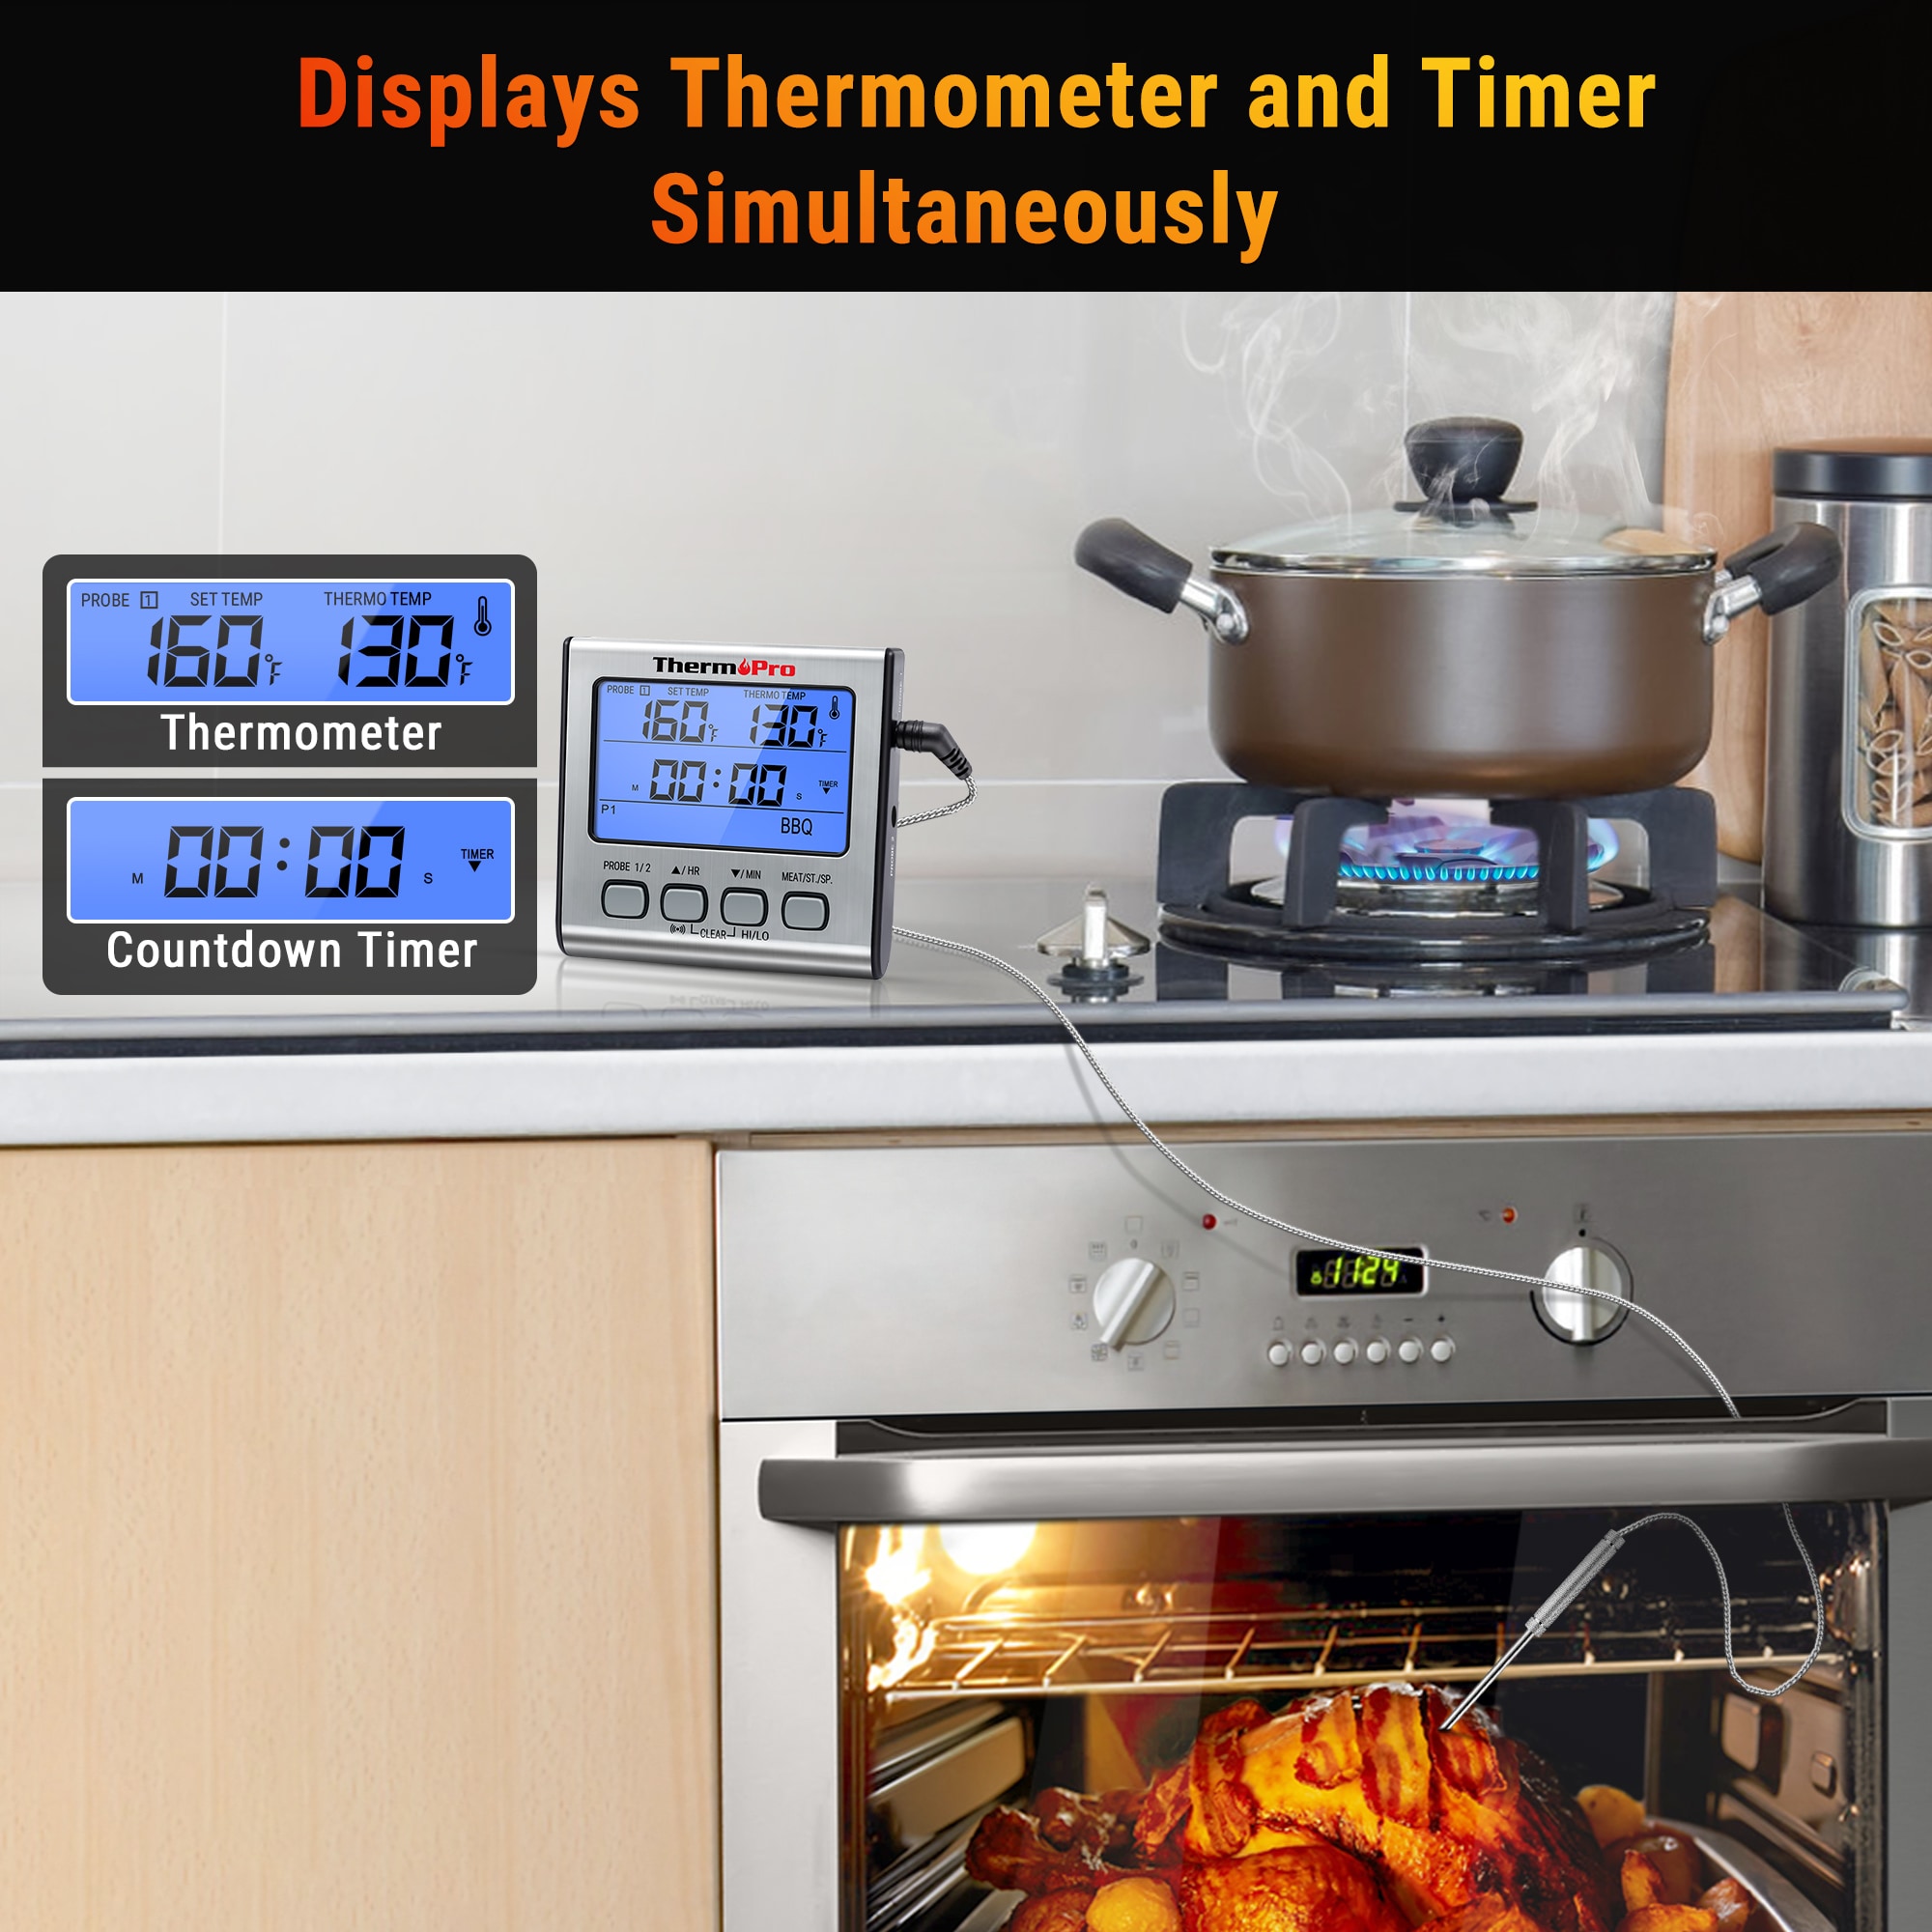 Maverick Housewares Oven-Chek Gourmet Roasting Thermometer, Silver